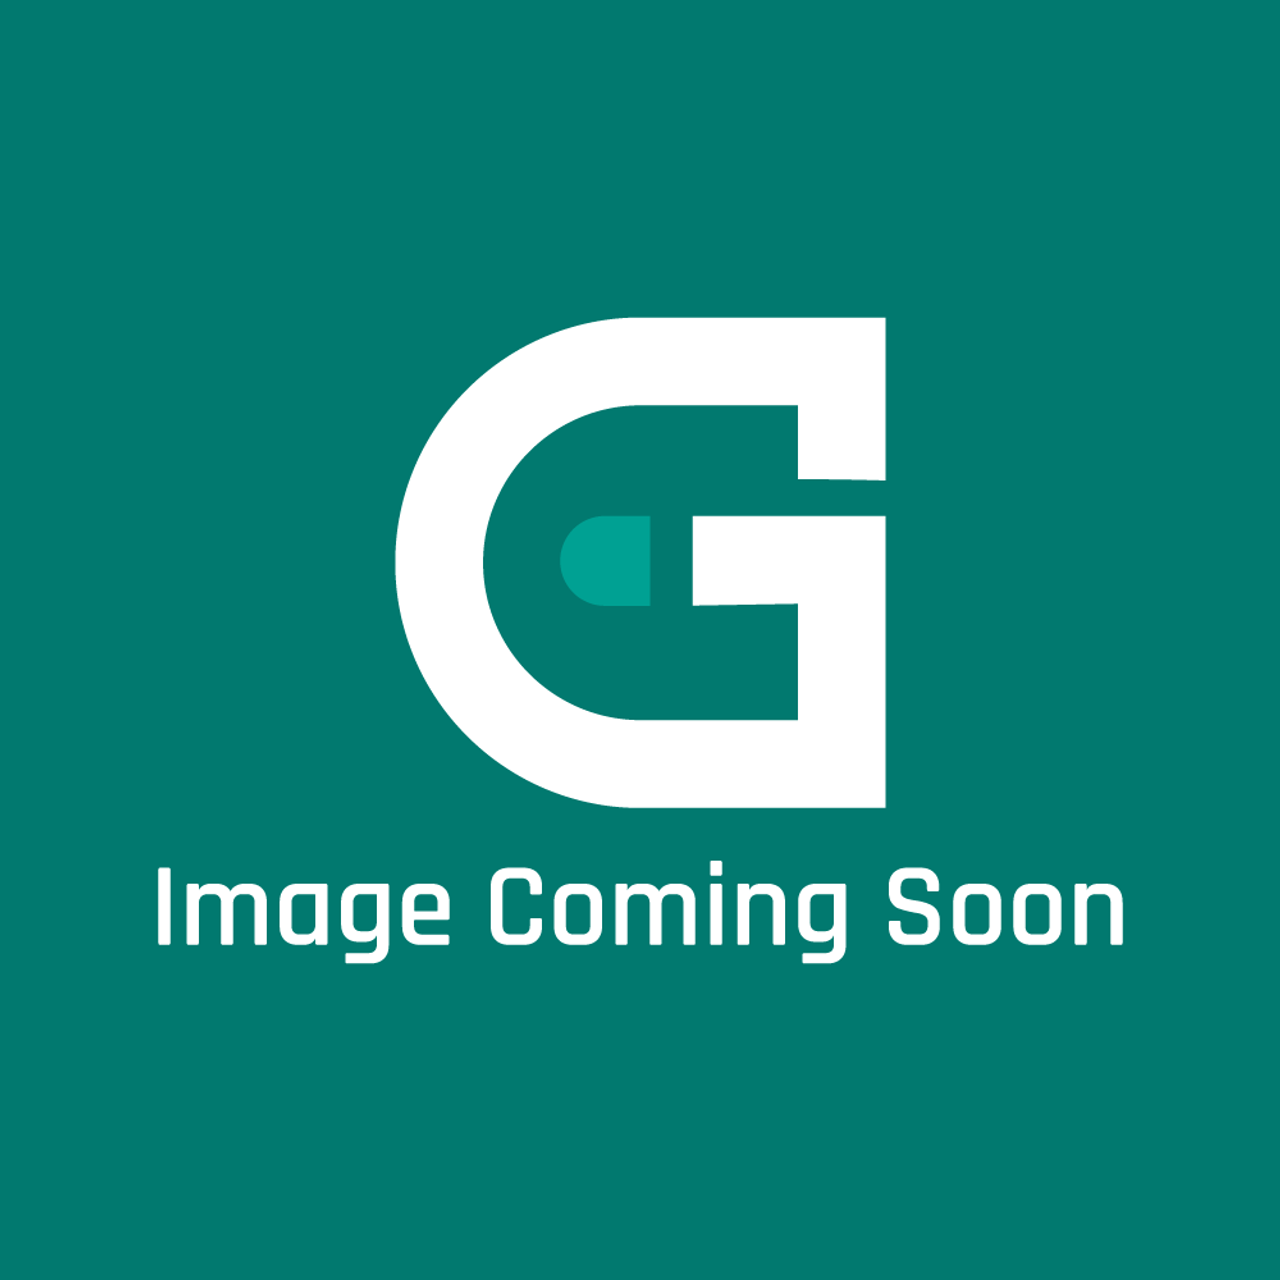 AGA Marvel R2706 - Hot Plate Baffle (Ro5M342461D) Rayburn - Image Coming Soon!